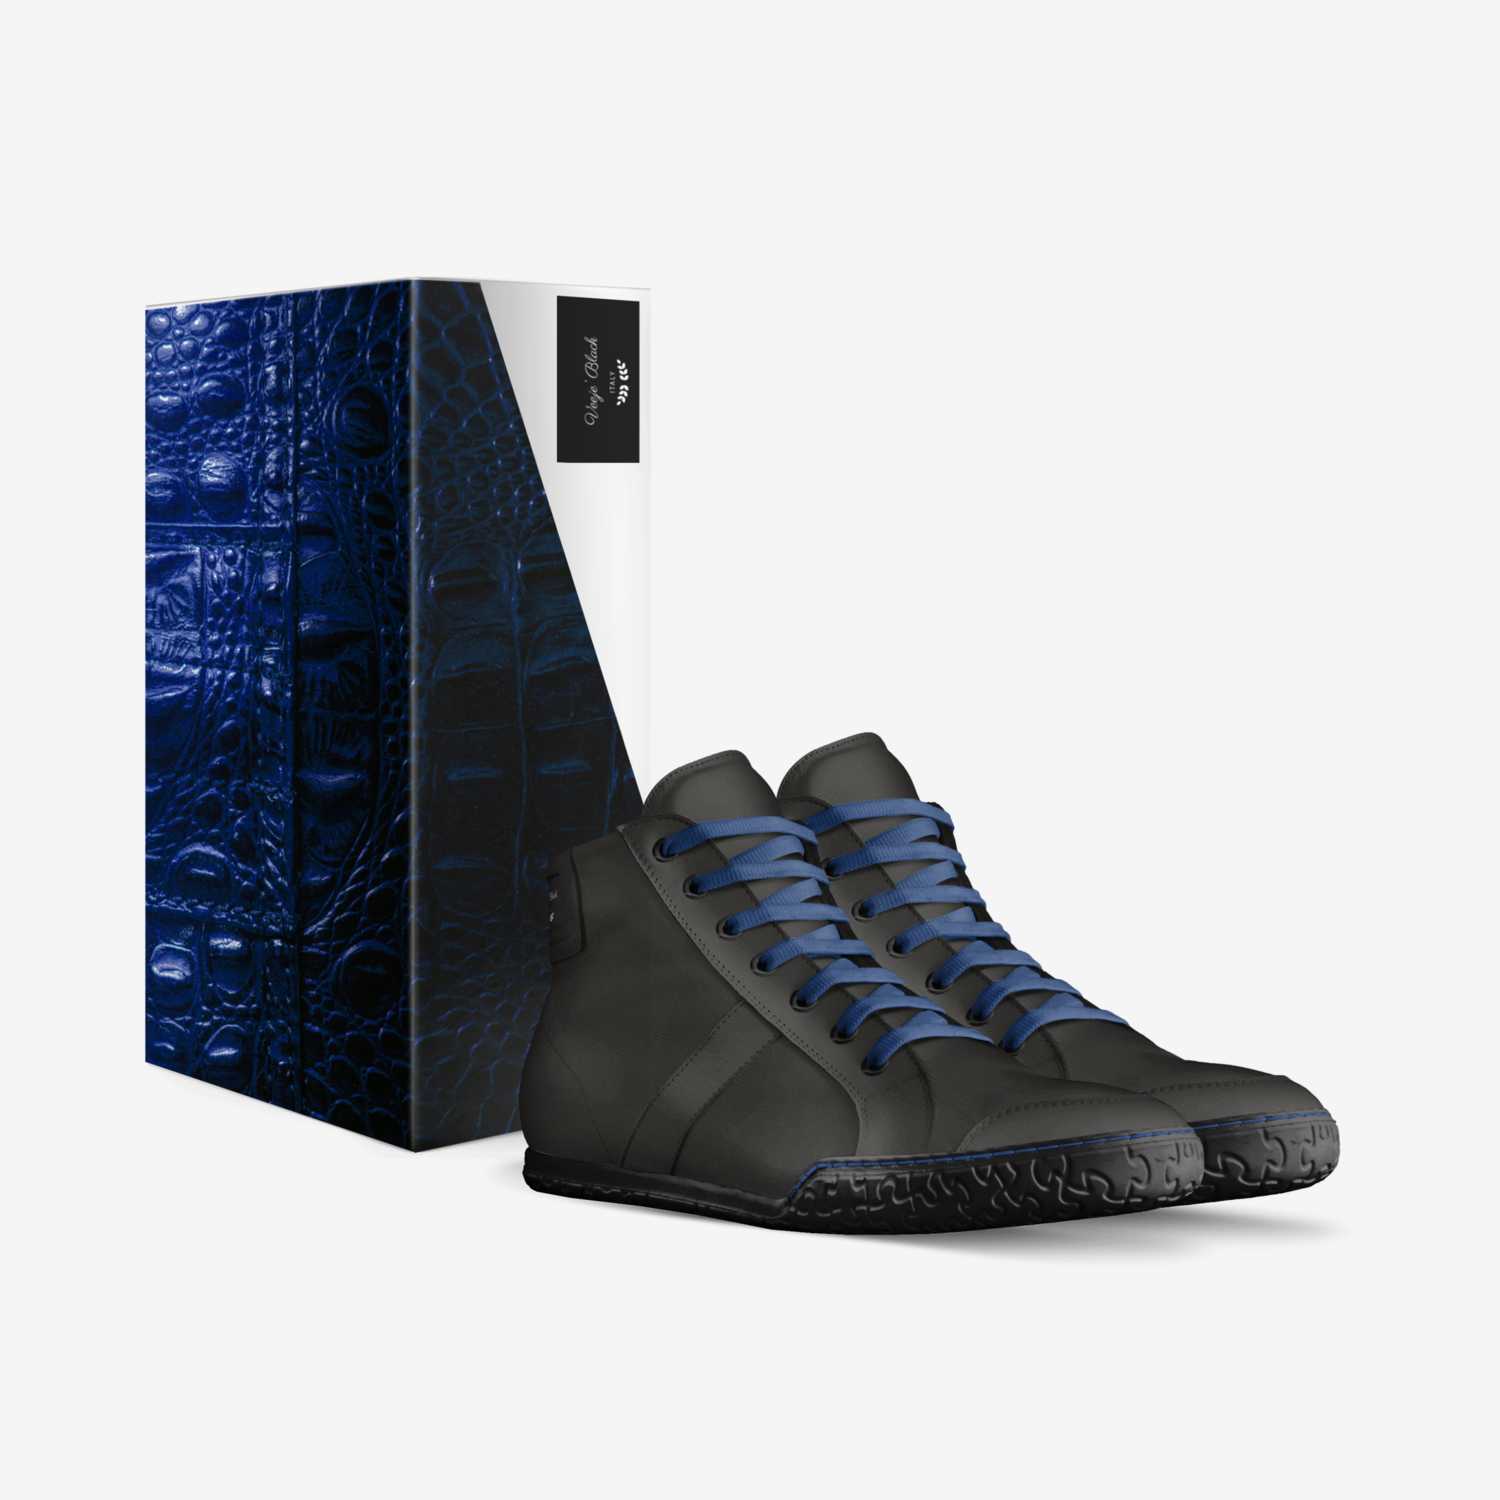 Veeje' Black custom made in Italy shoes by vaneesah Bahar | Box view